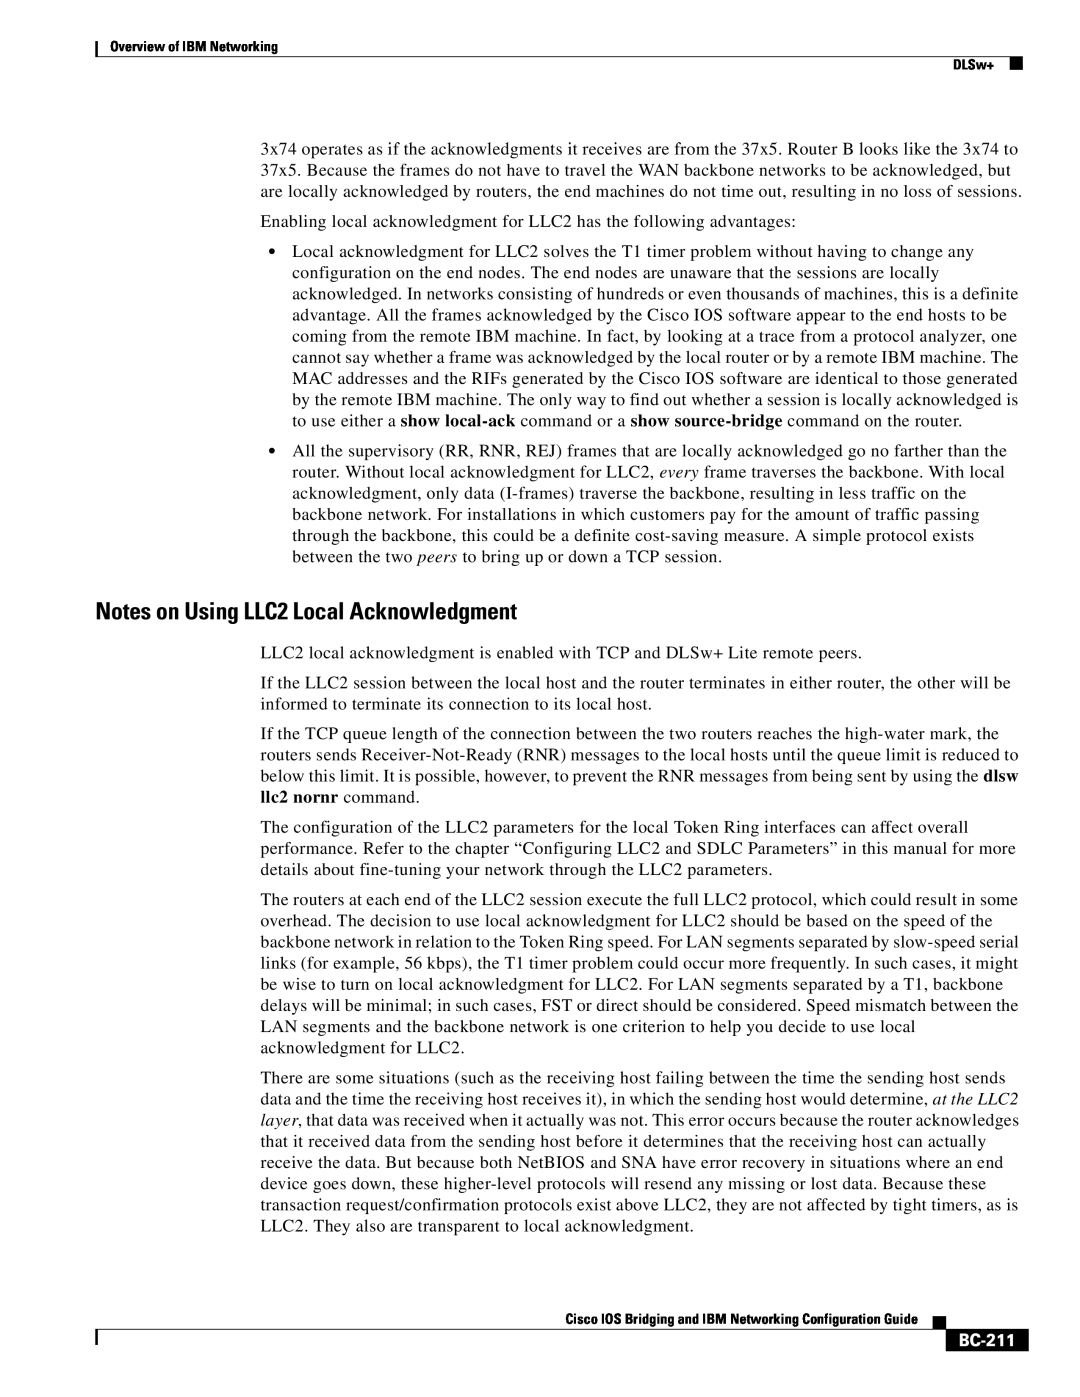 IBM BC-203 manual Notes on Using LLC2 Local Acknowledgment, BC-211 